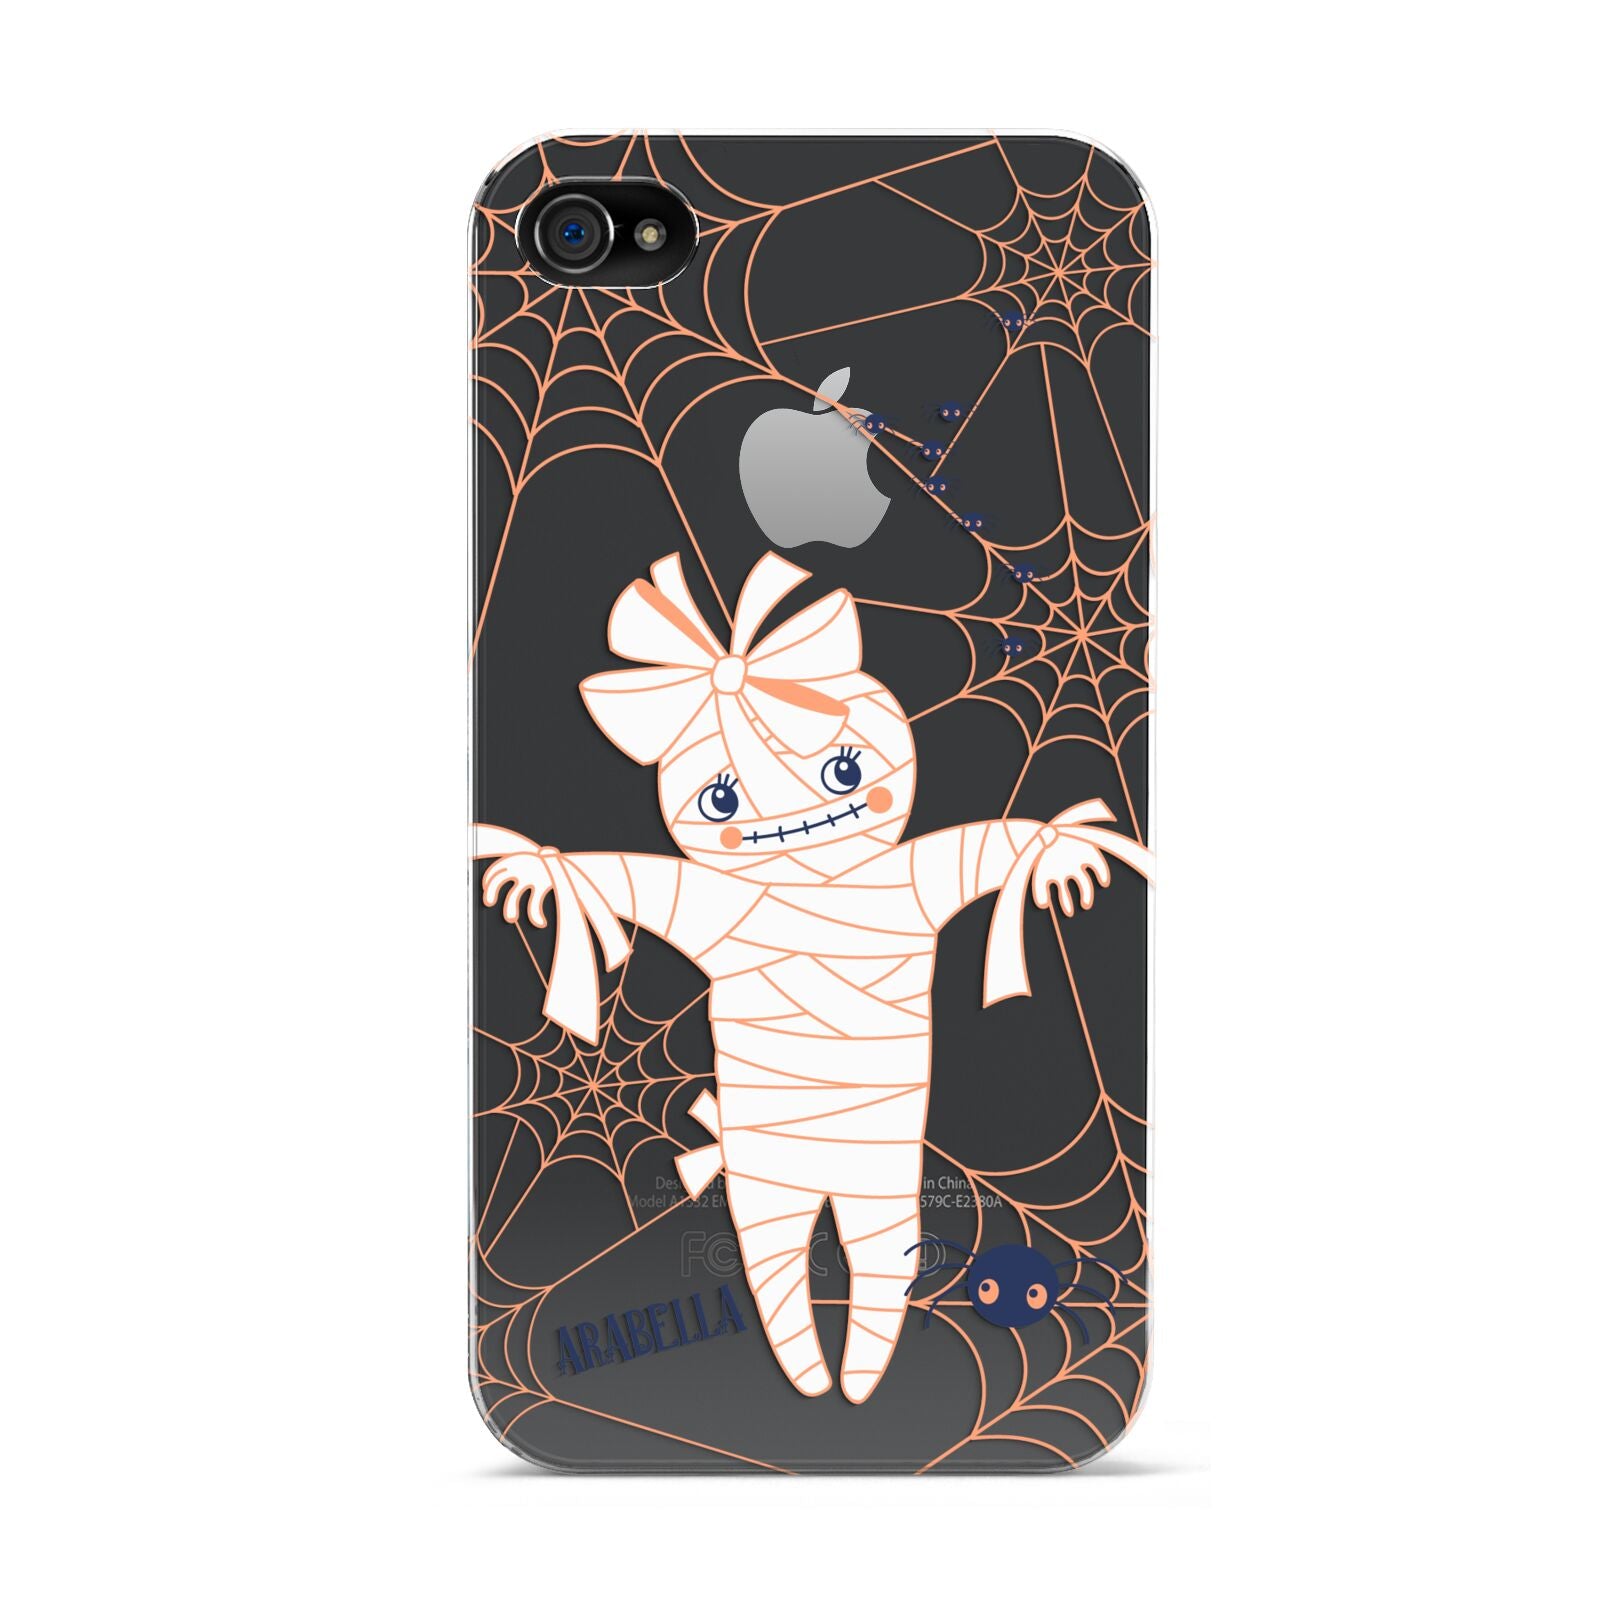 Mummy Halloween Apple iPhone 4s Case